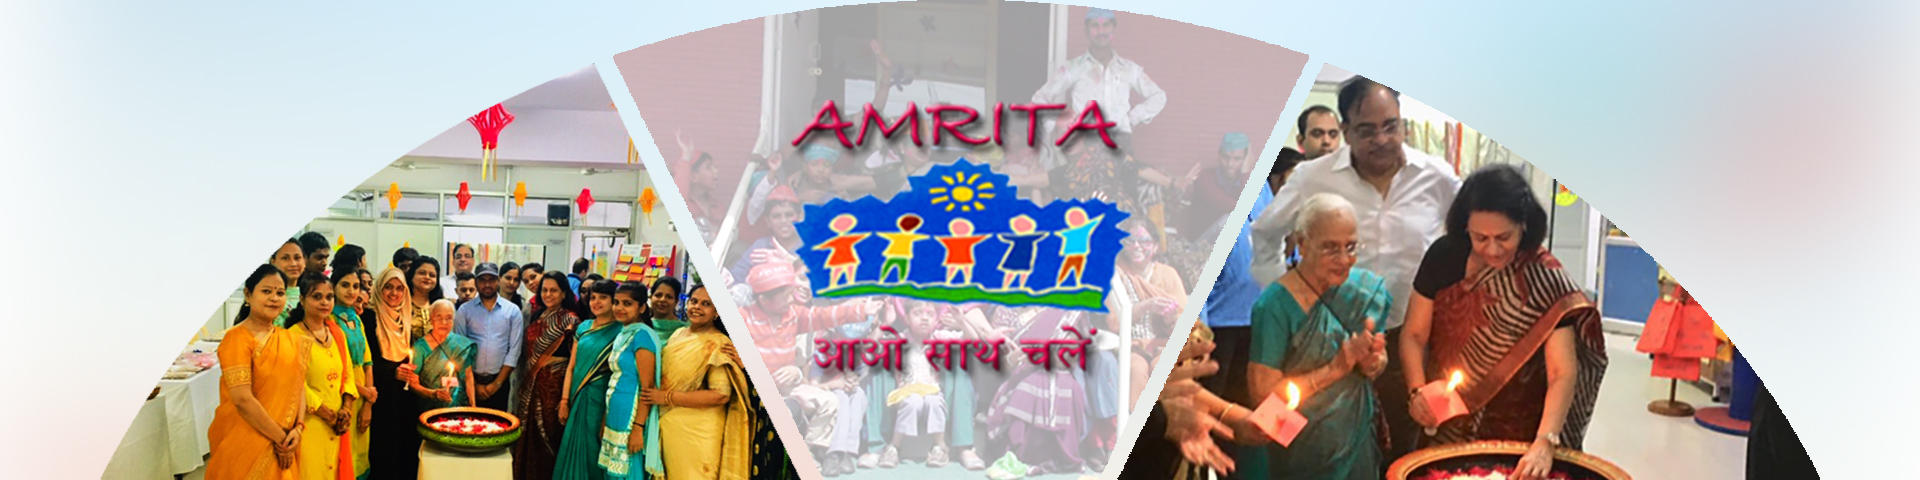 Amrita Initiative Banner